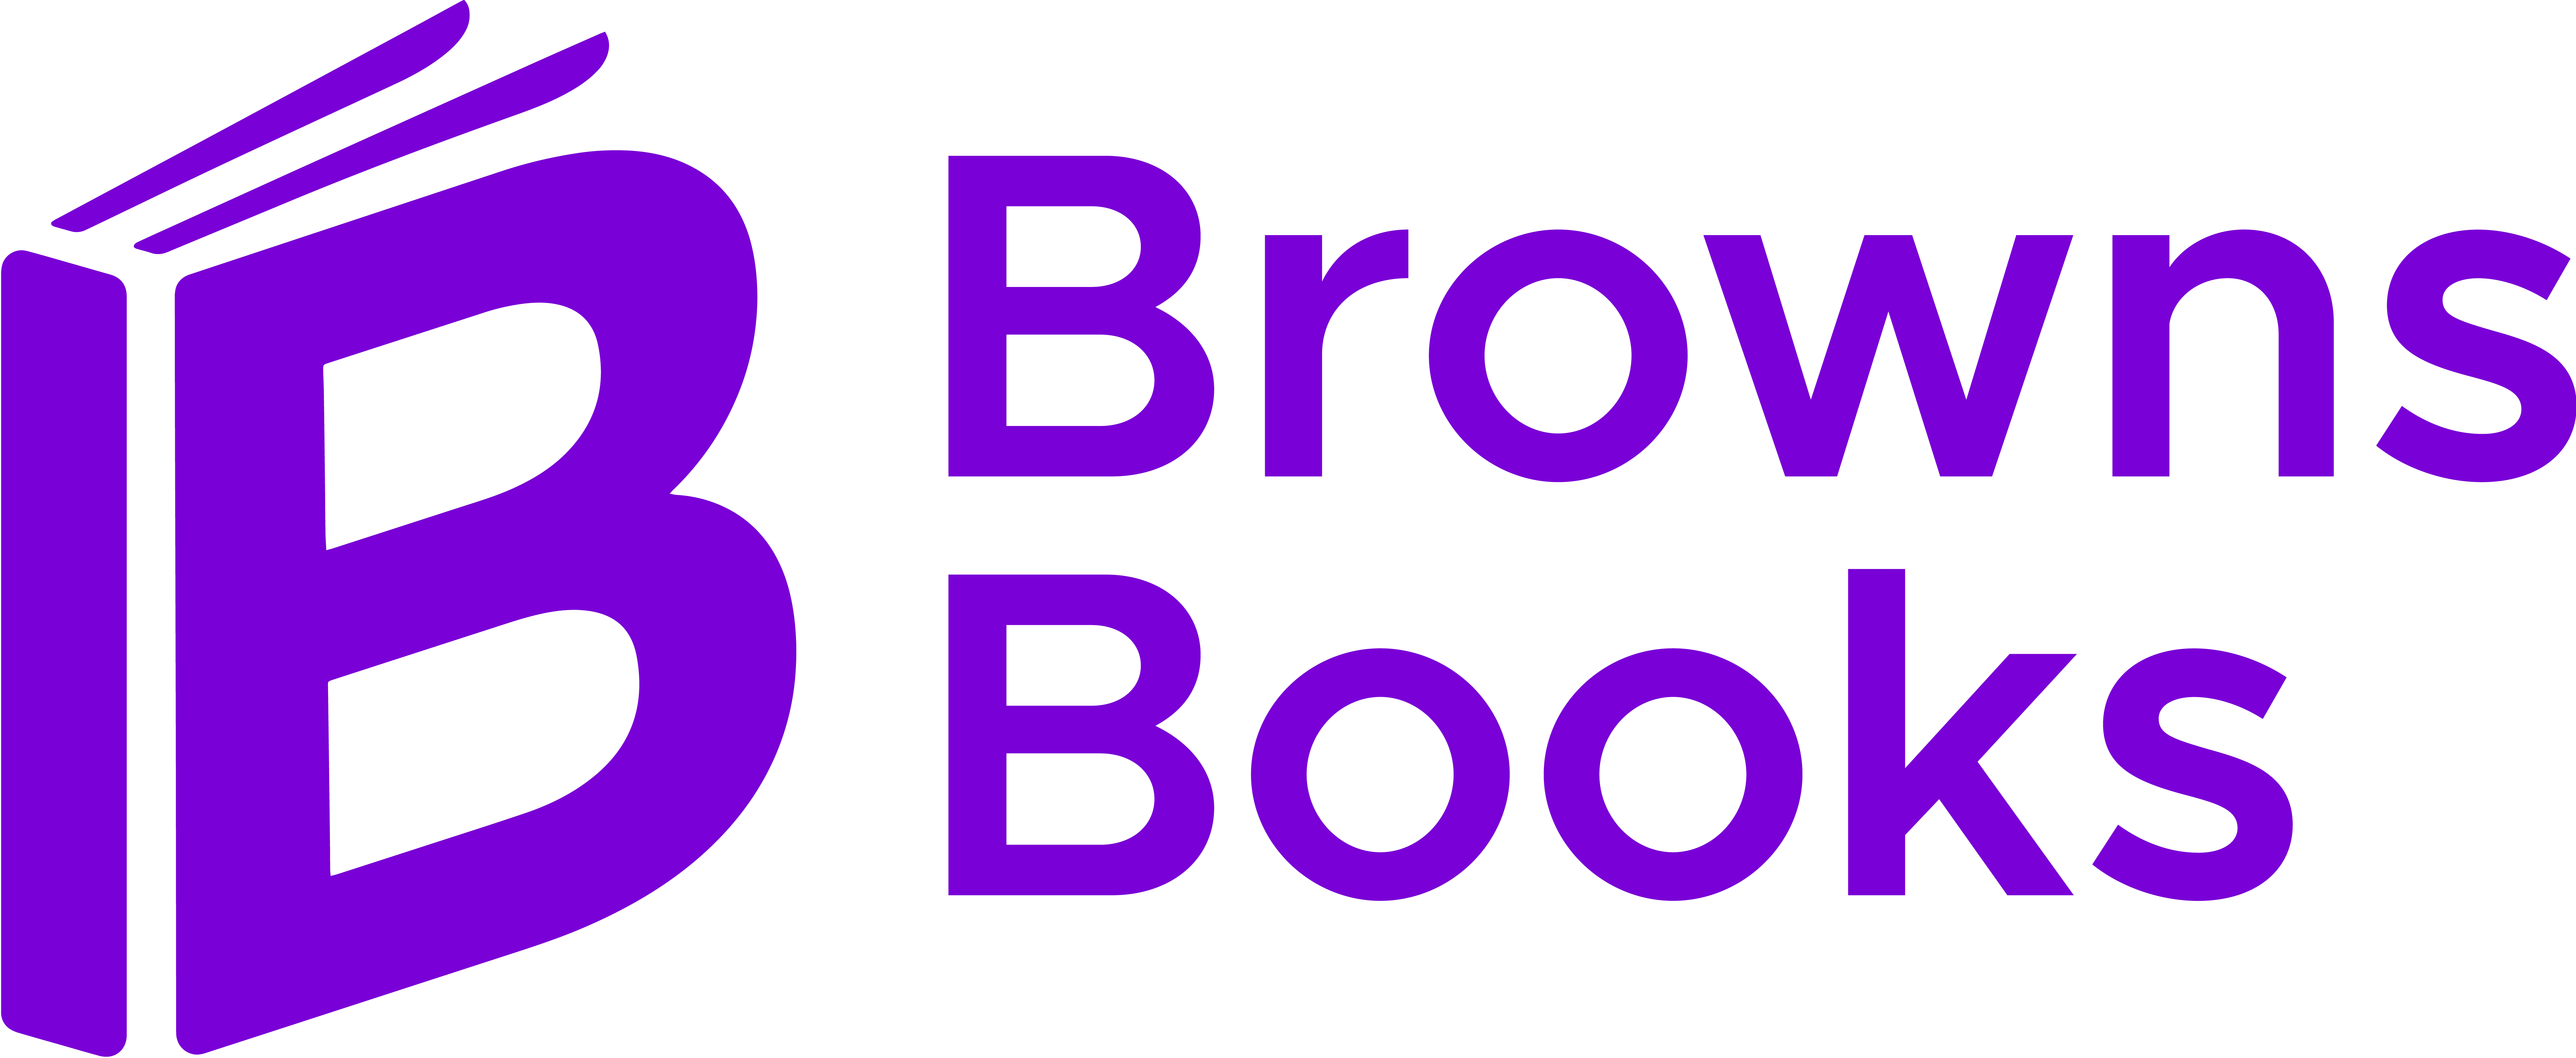 Browns Books logo.